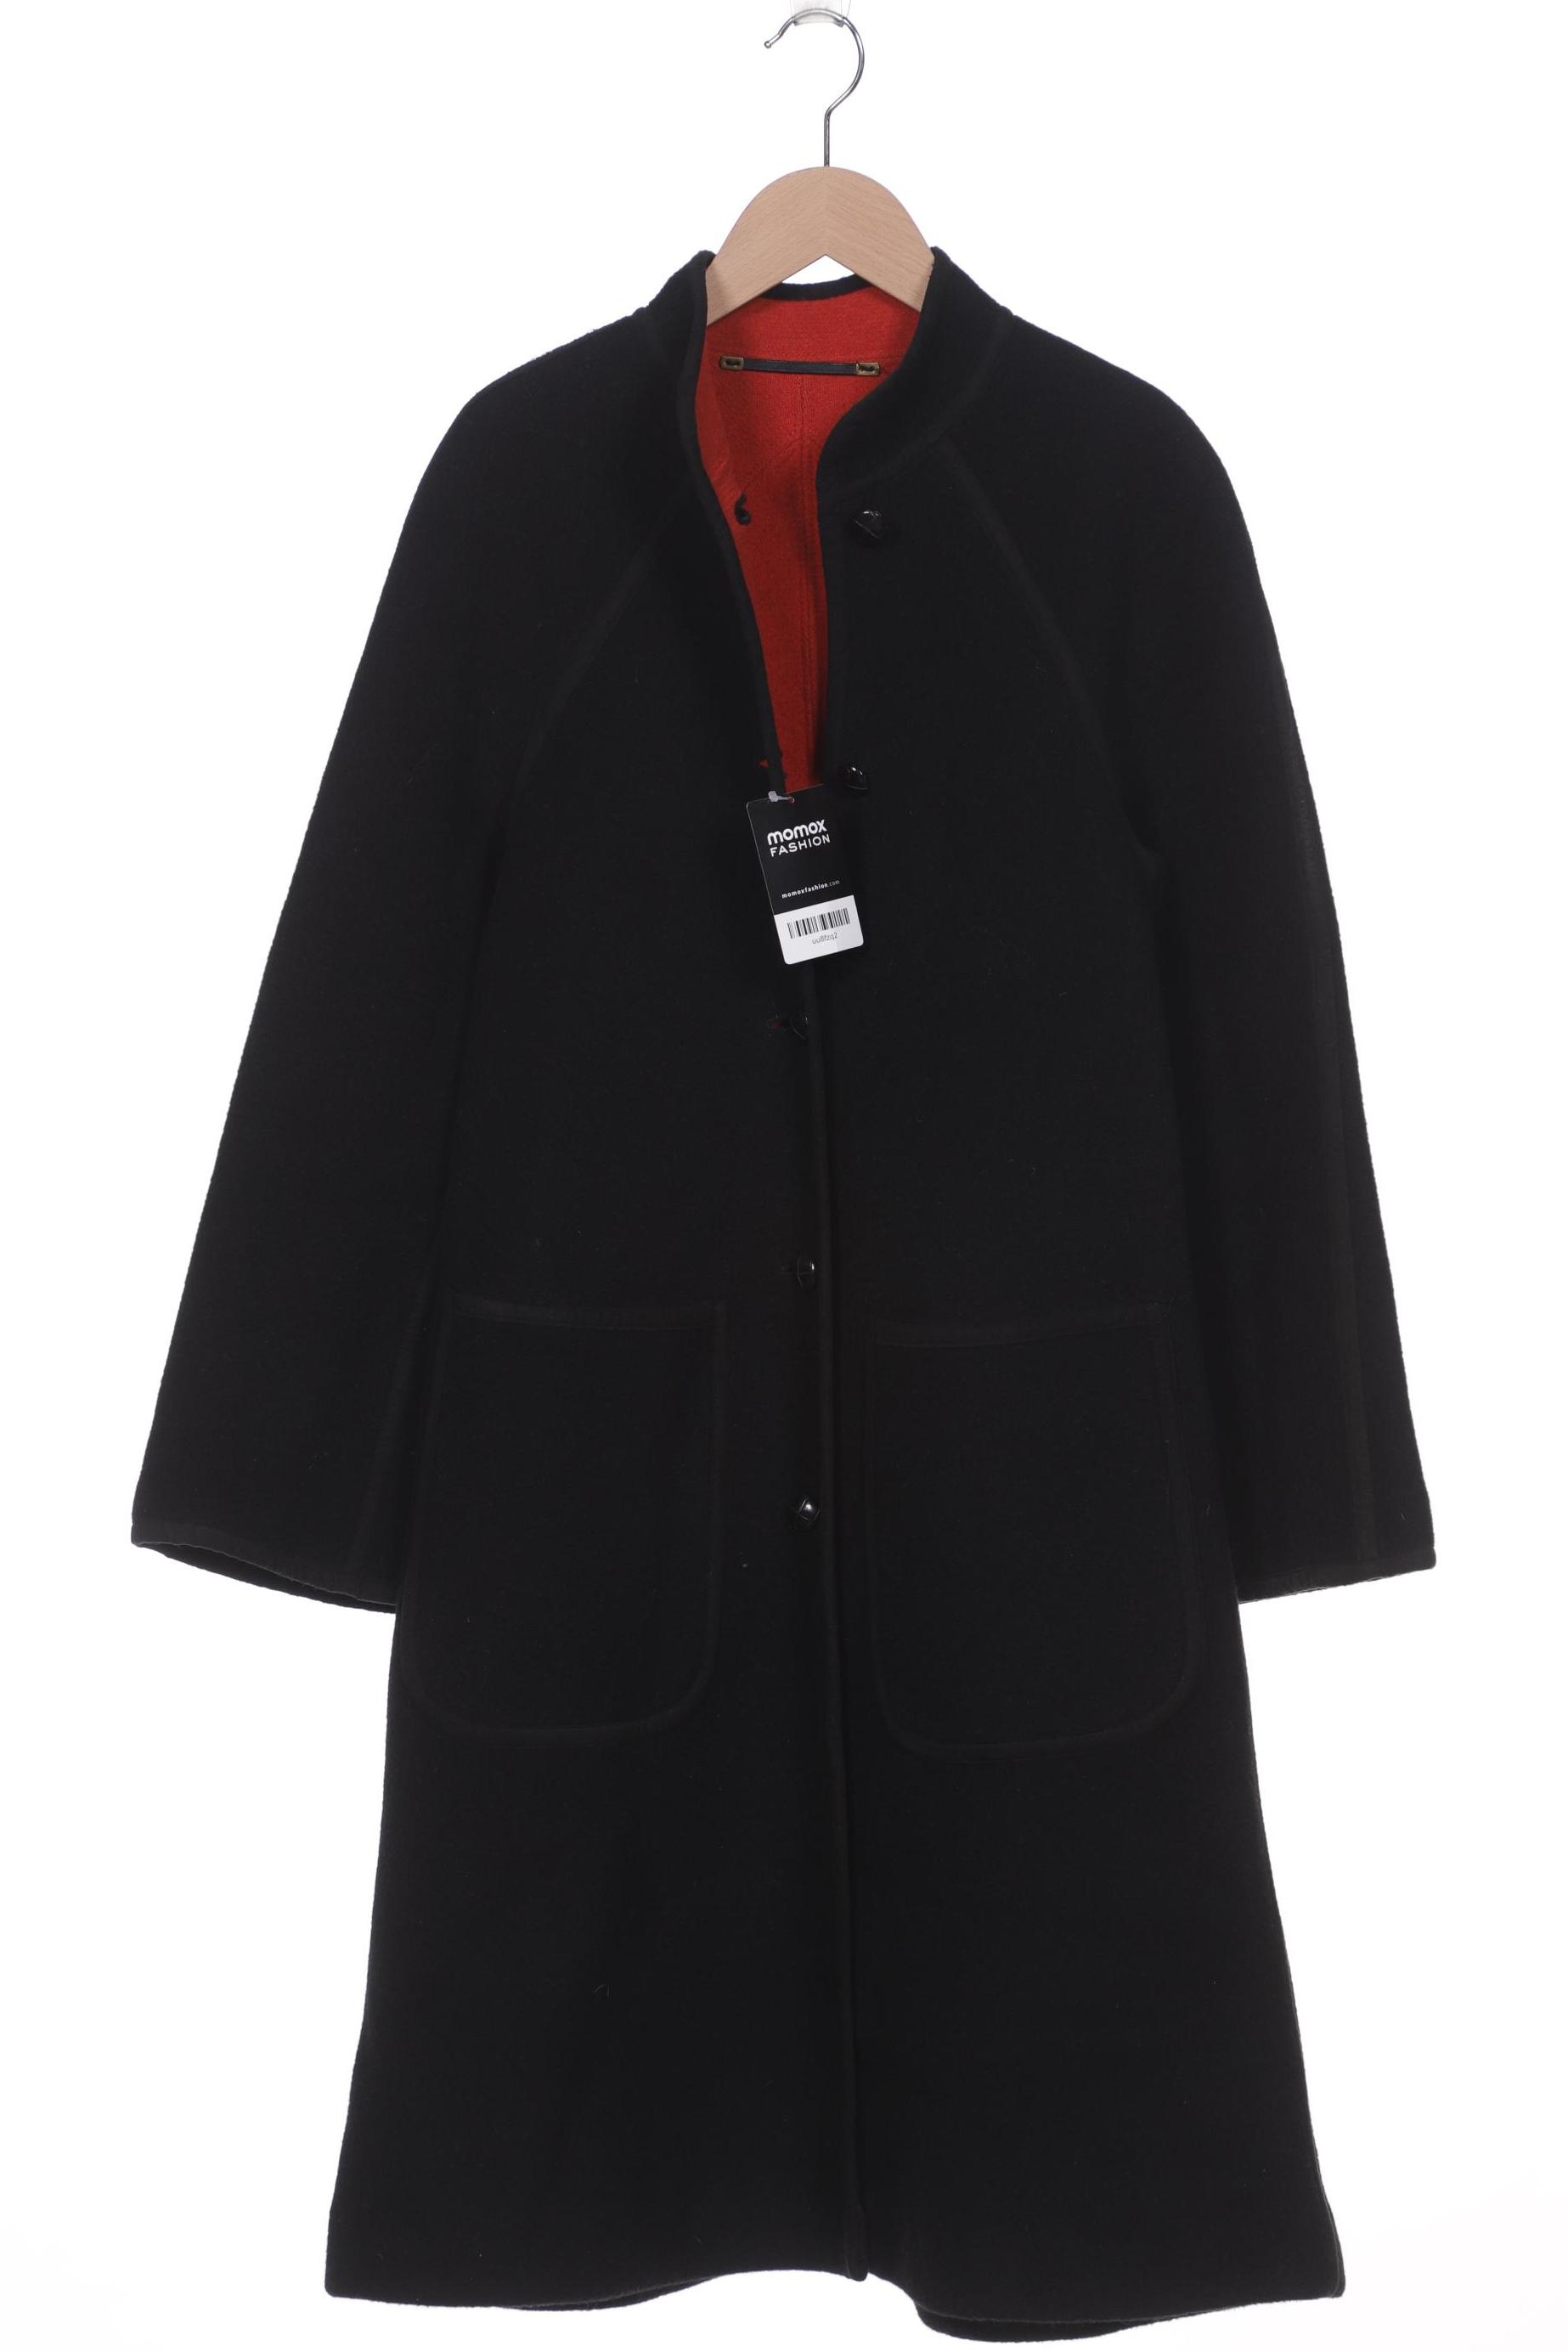 Bogner Damen Mantel, schwarz, Gr. 34 von Bogner